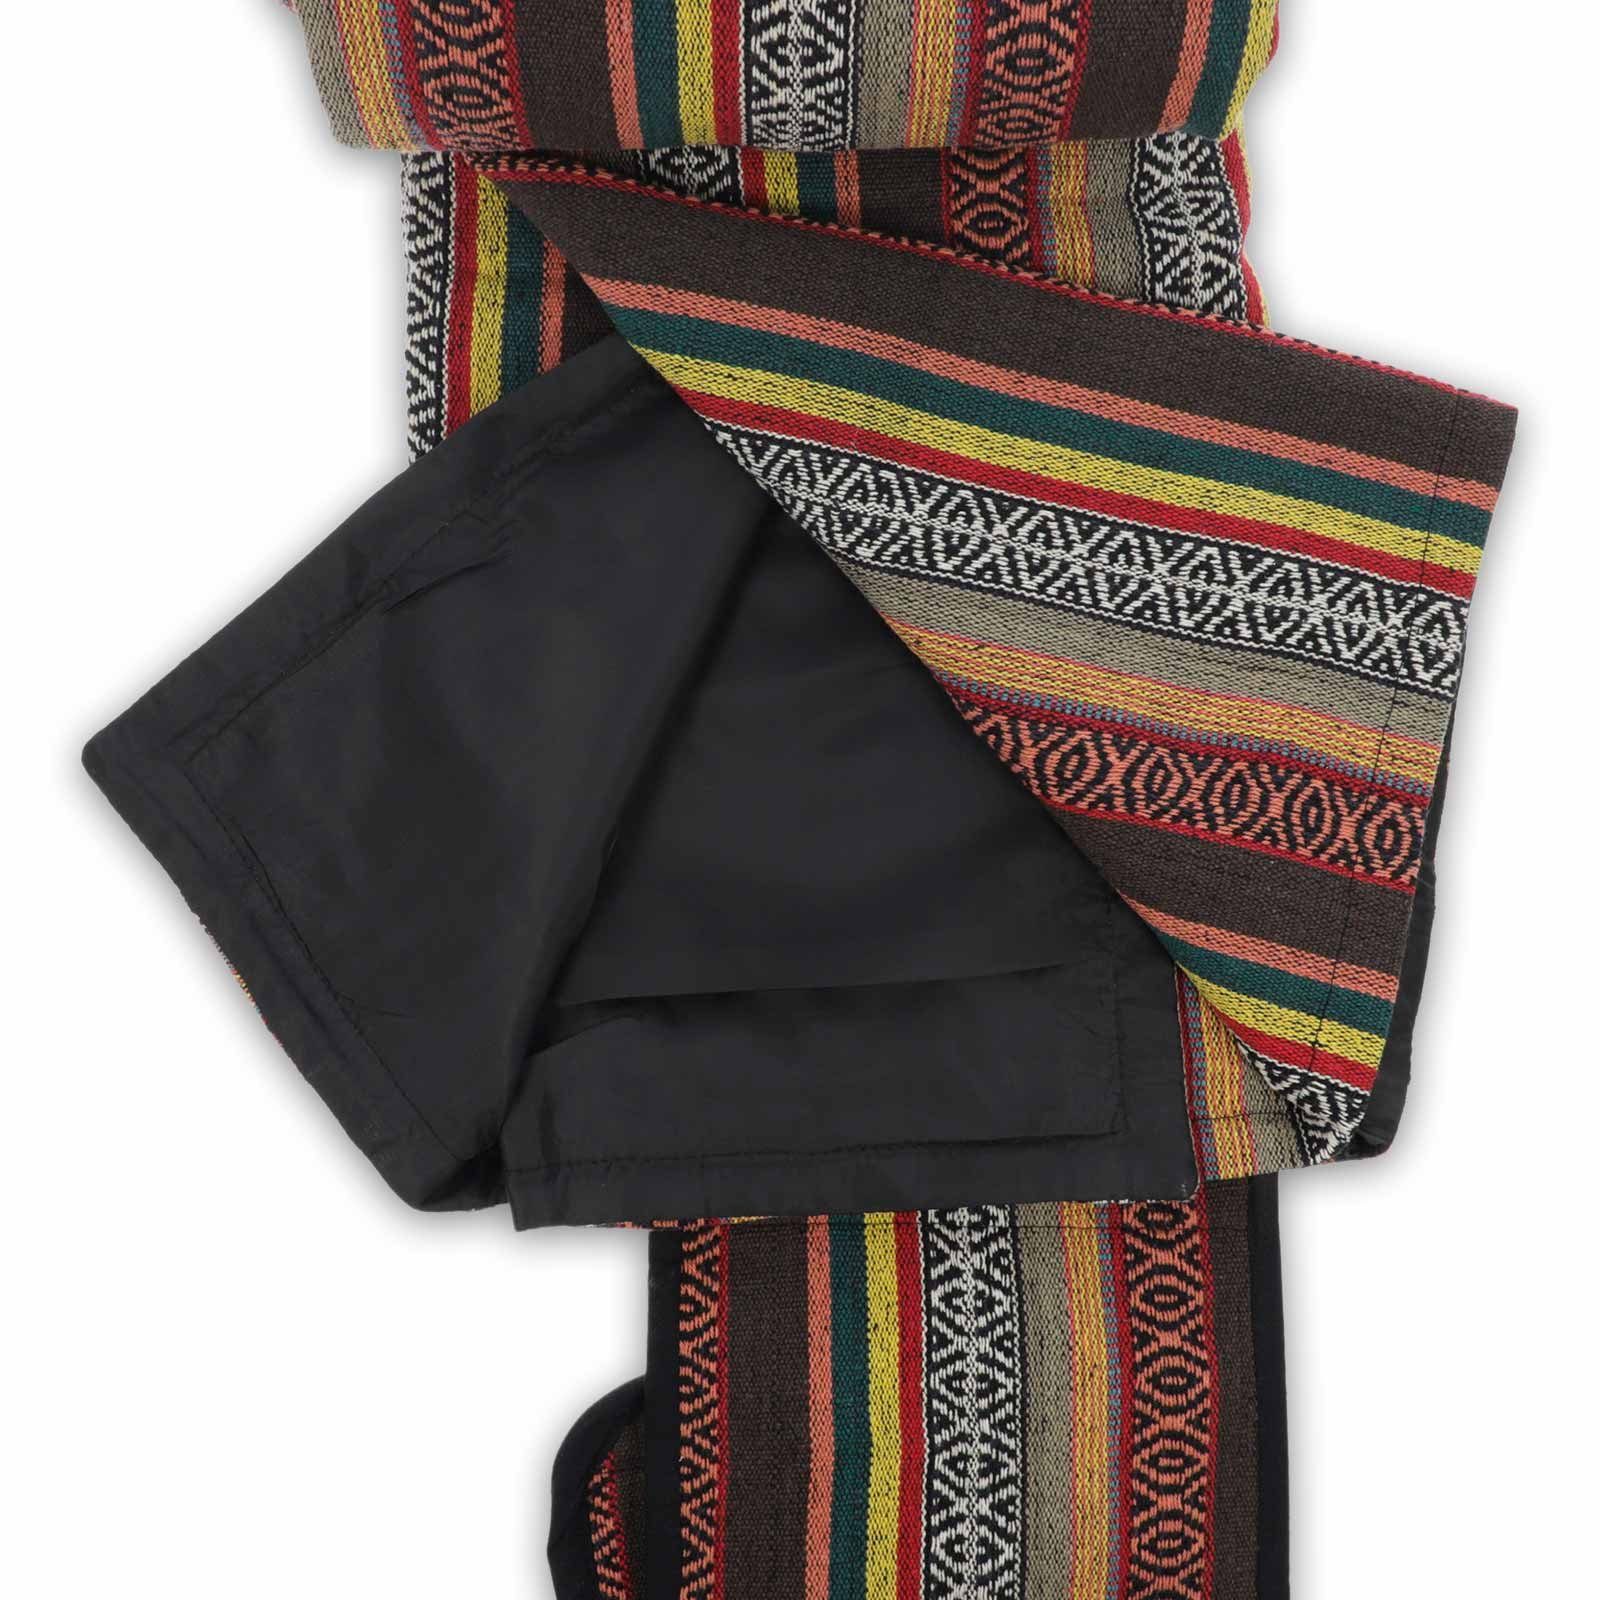 Mehrfarbig UND Picknickdecke+Azteken MAGIE KUNST Handgewebte Muster+Tragegriff, Picknickdecke Familien